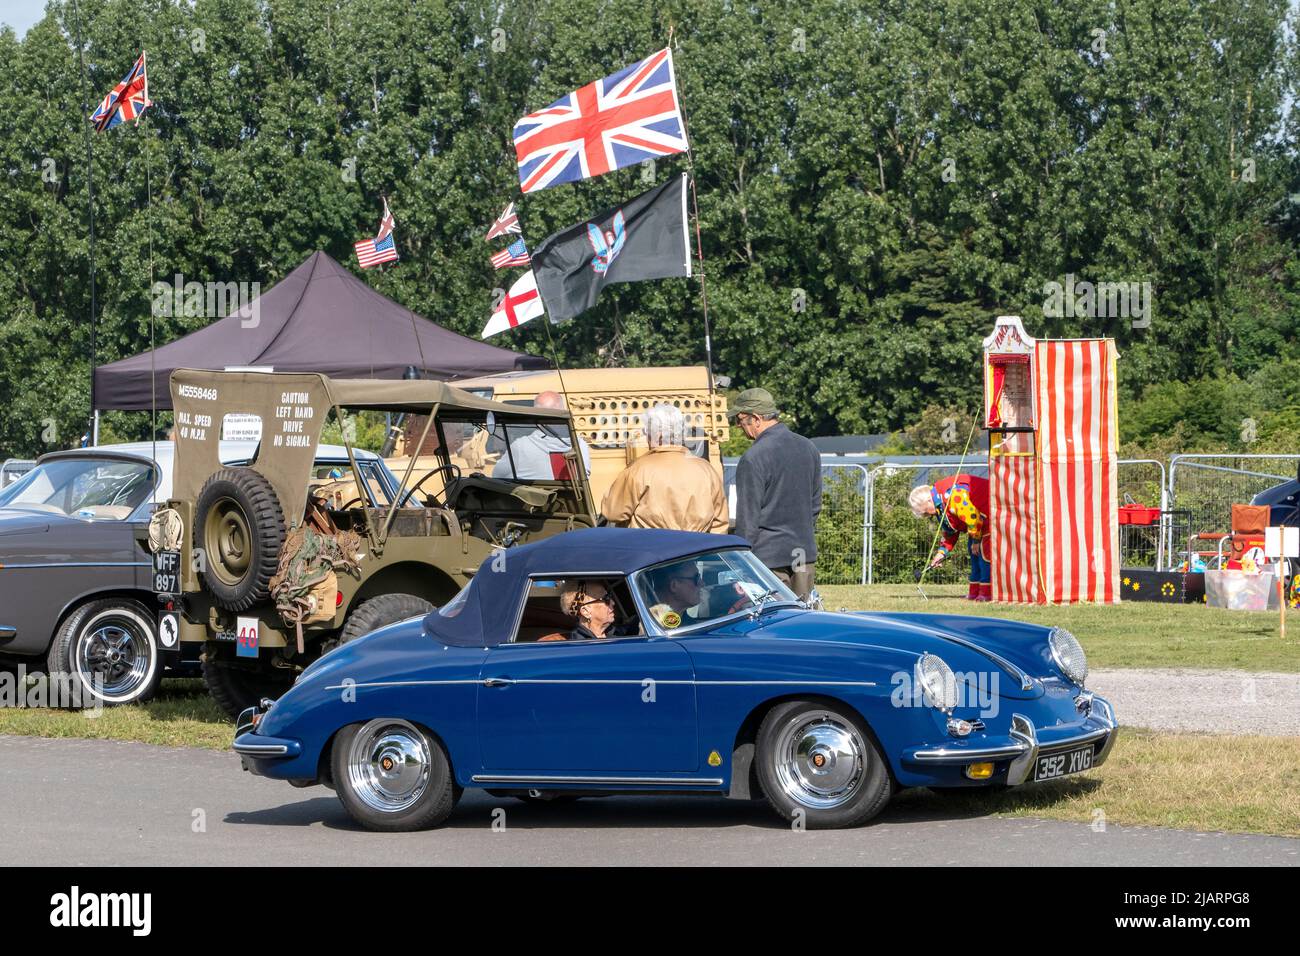 The Deal Classic Car show at Betteshanger Park near deal Kent UK Stock Photo